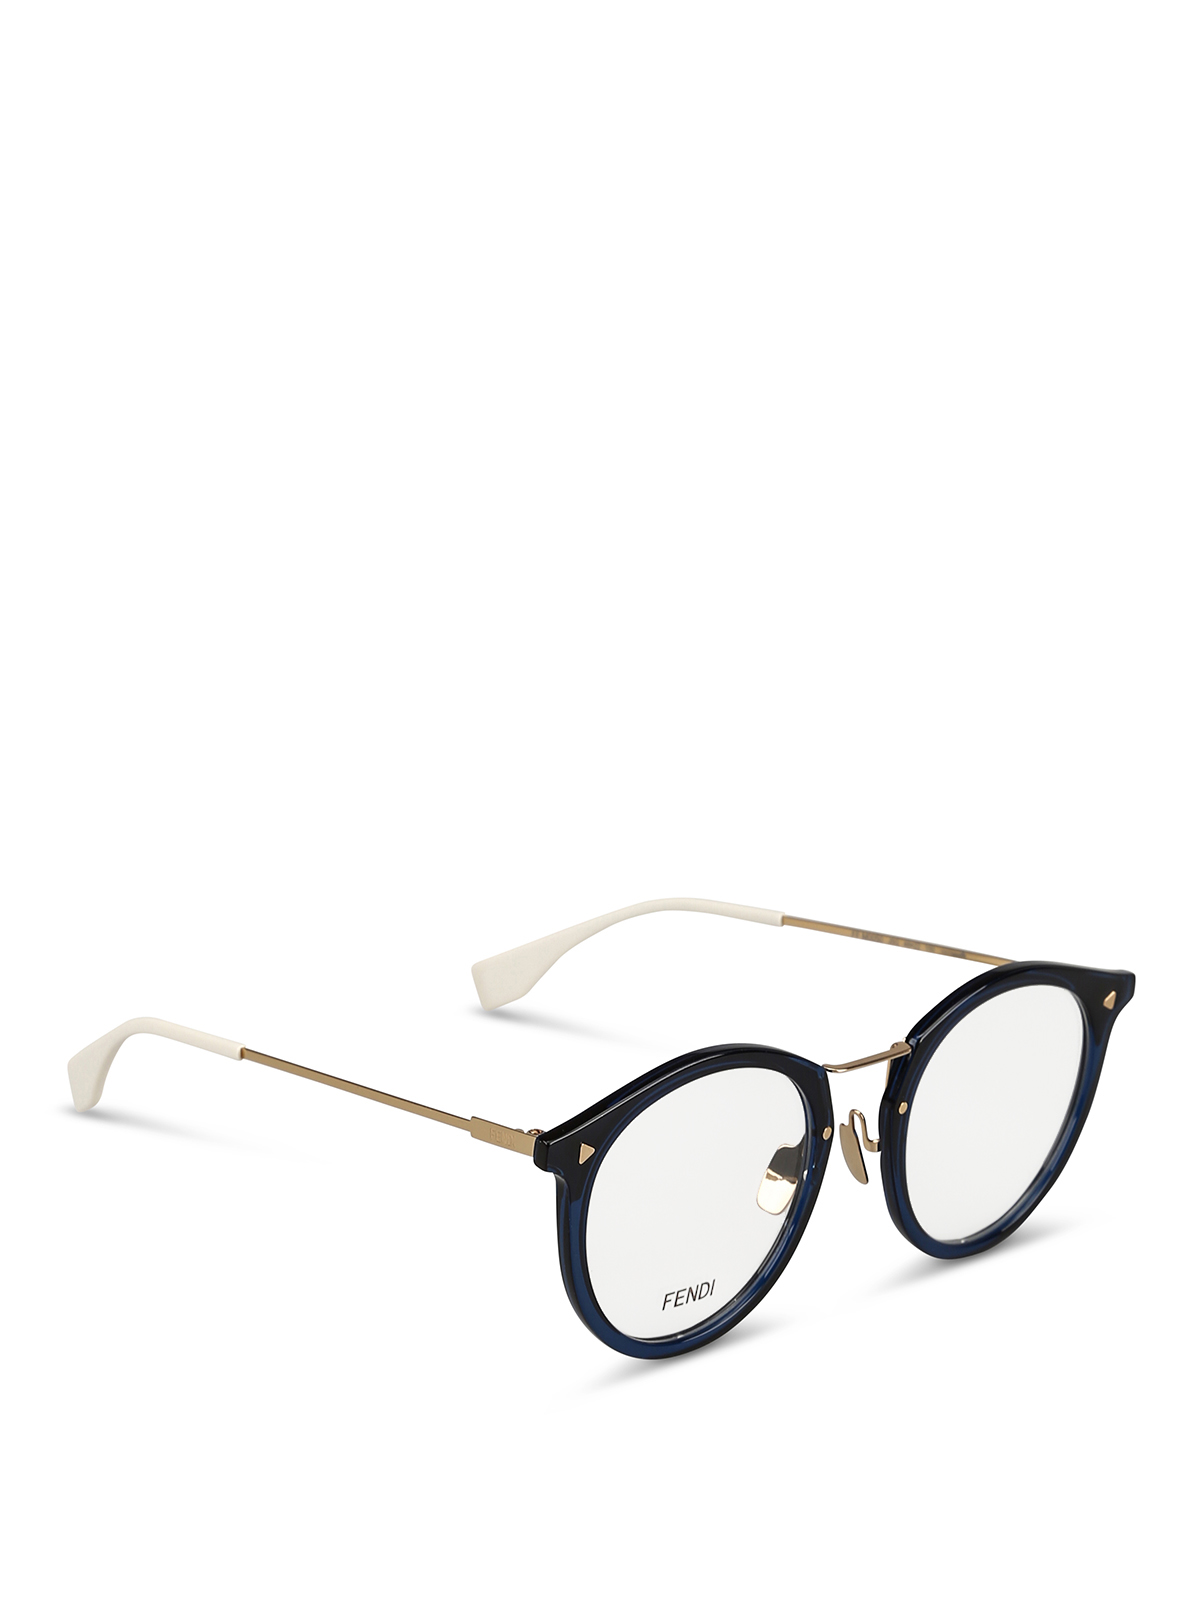 Fendi - Navy blue eyeglasses - Glasses 